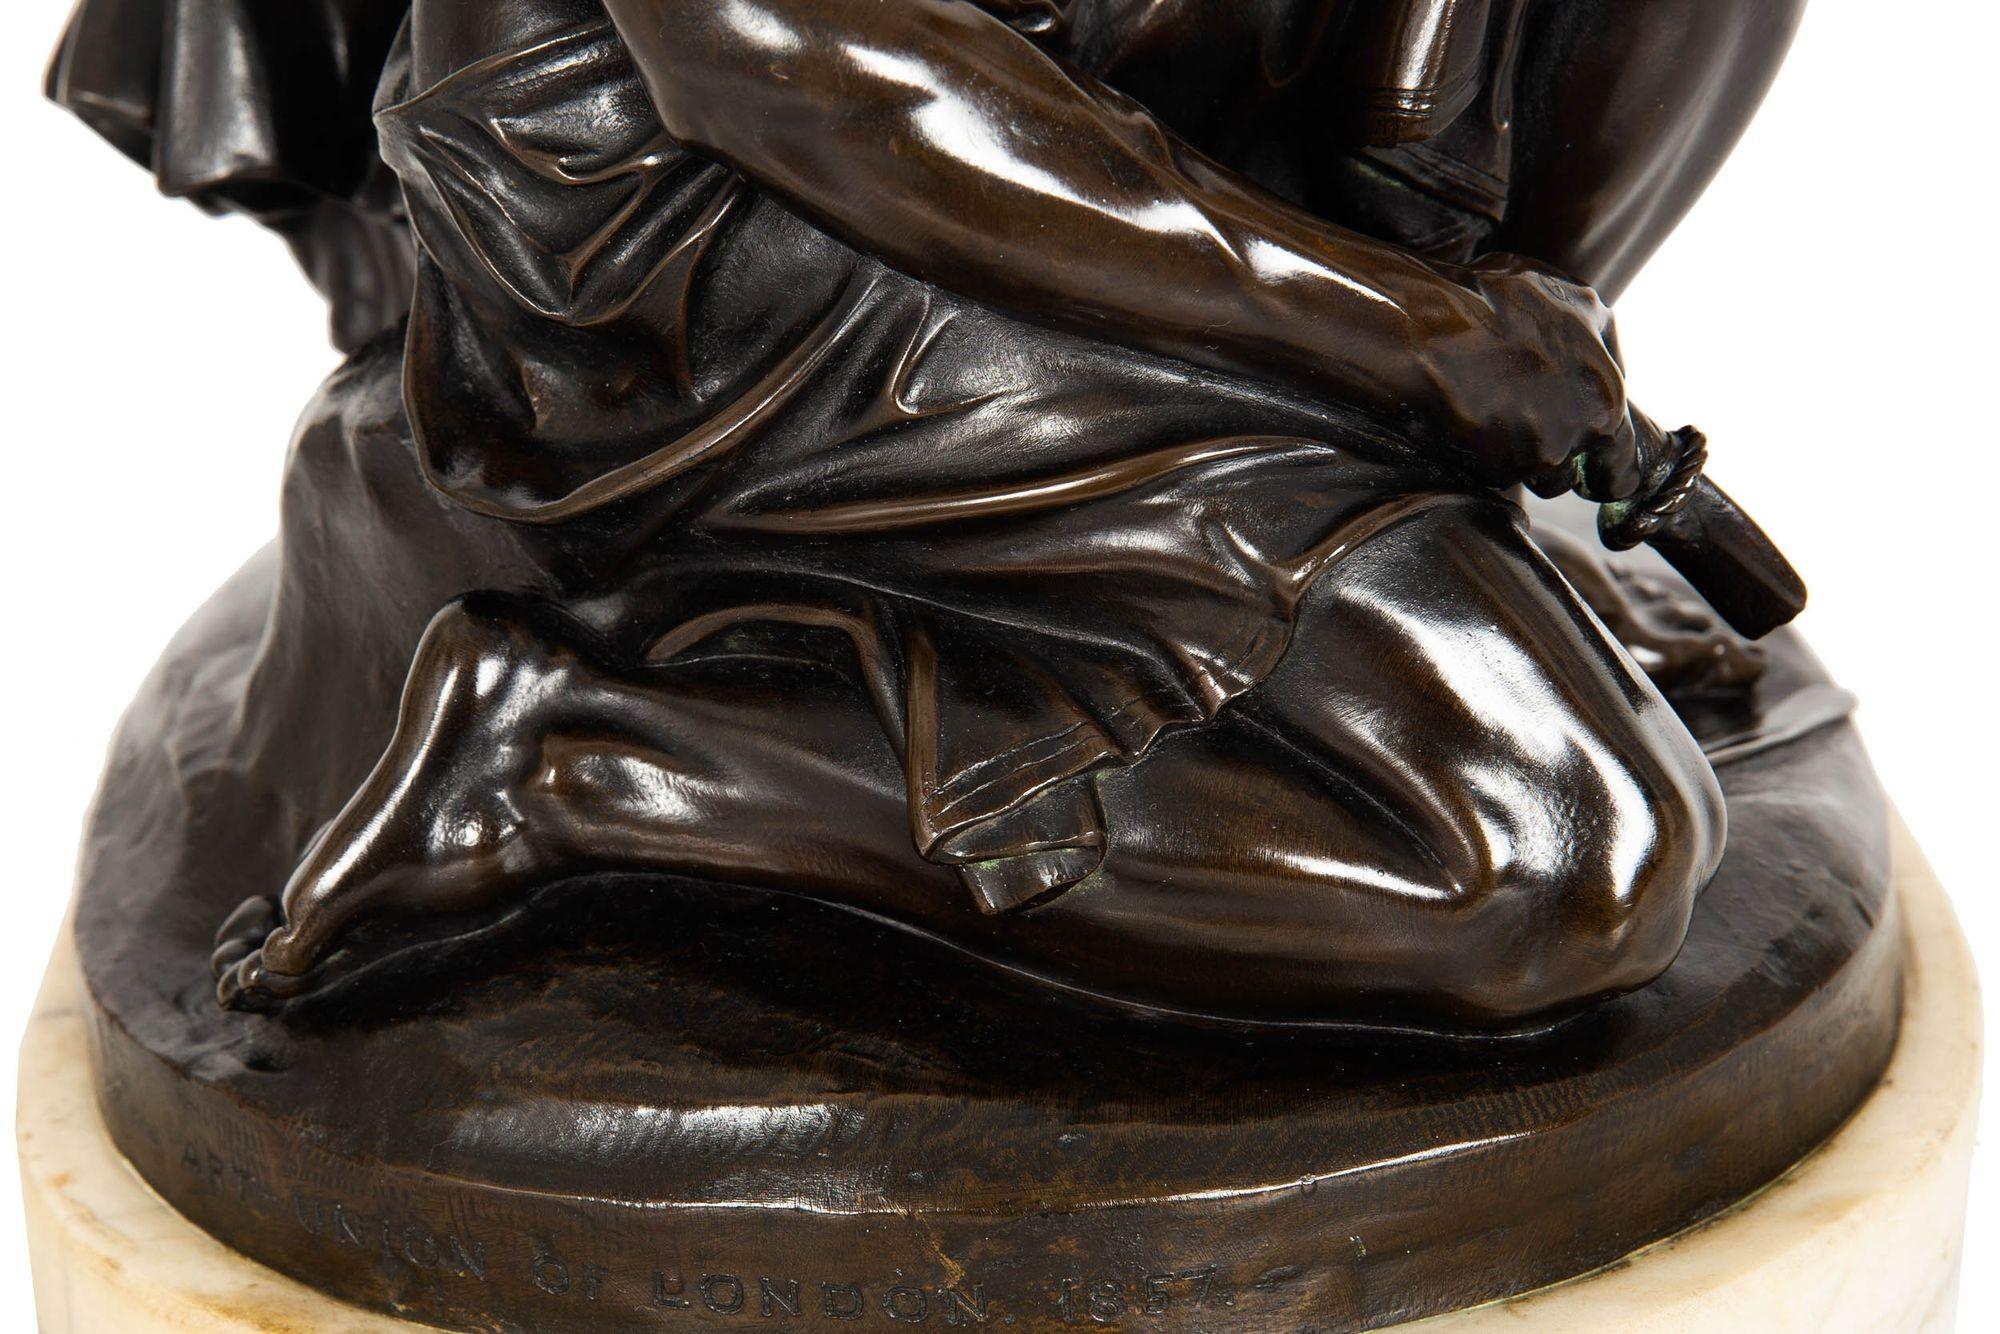 English Bronze Sculpture “Mercy on Battlefield” (1856), Edward Bowring Stephens 13